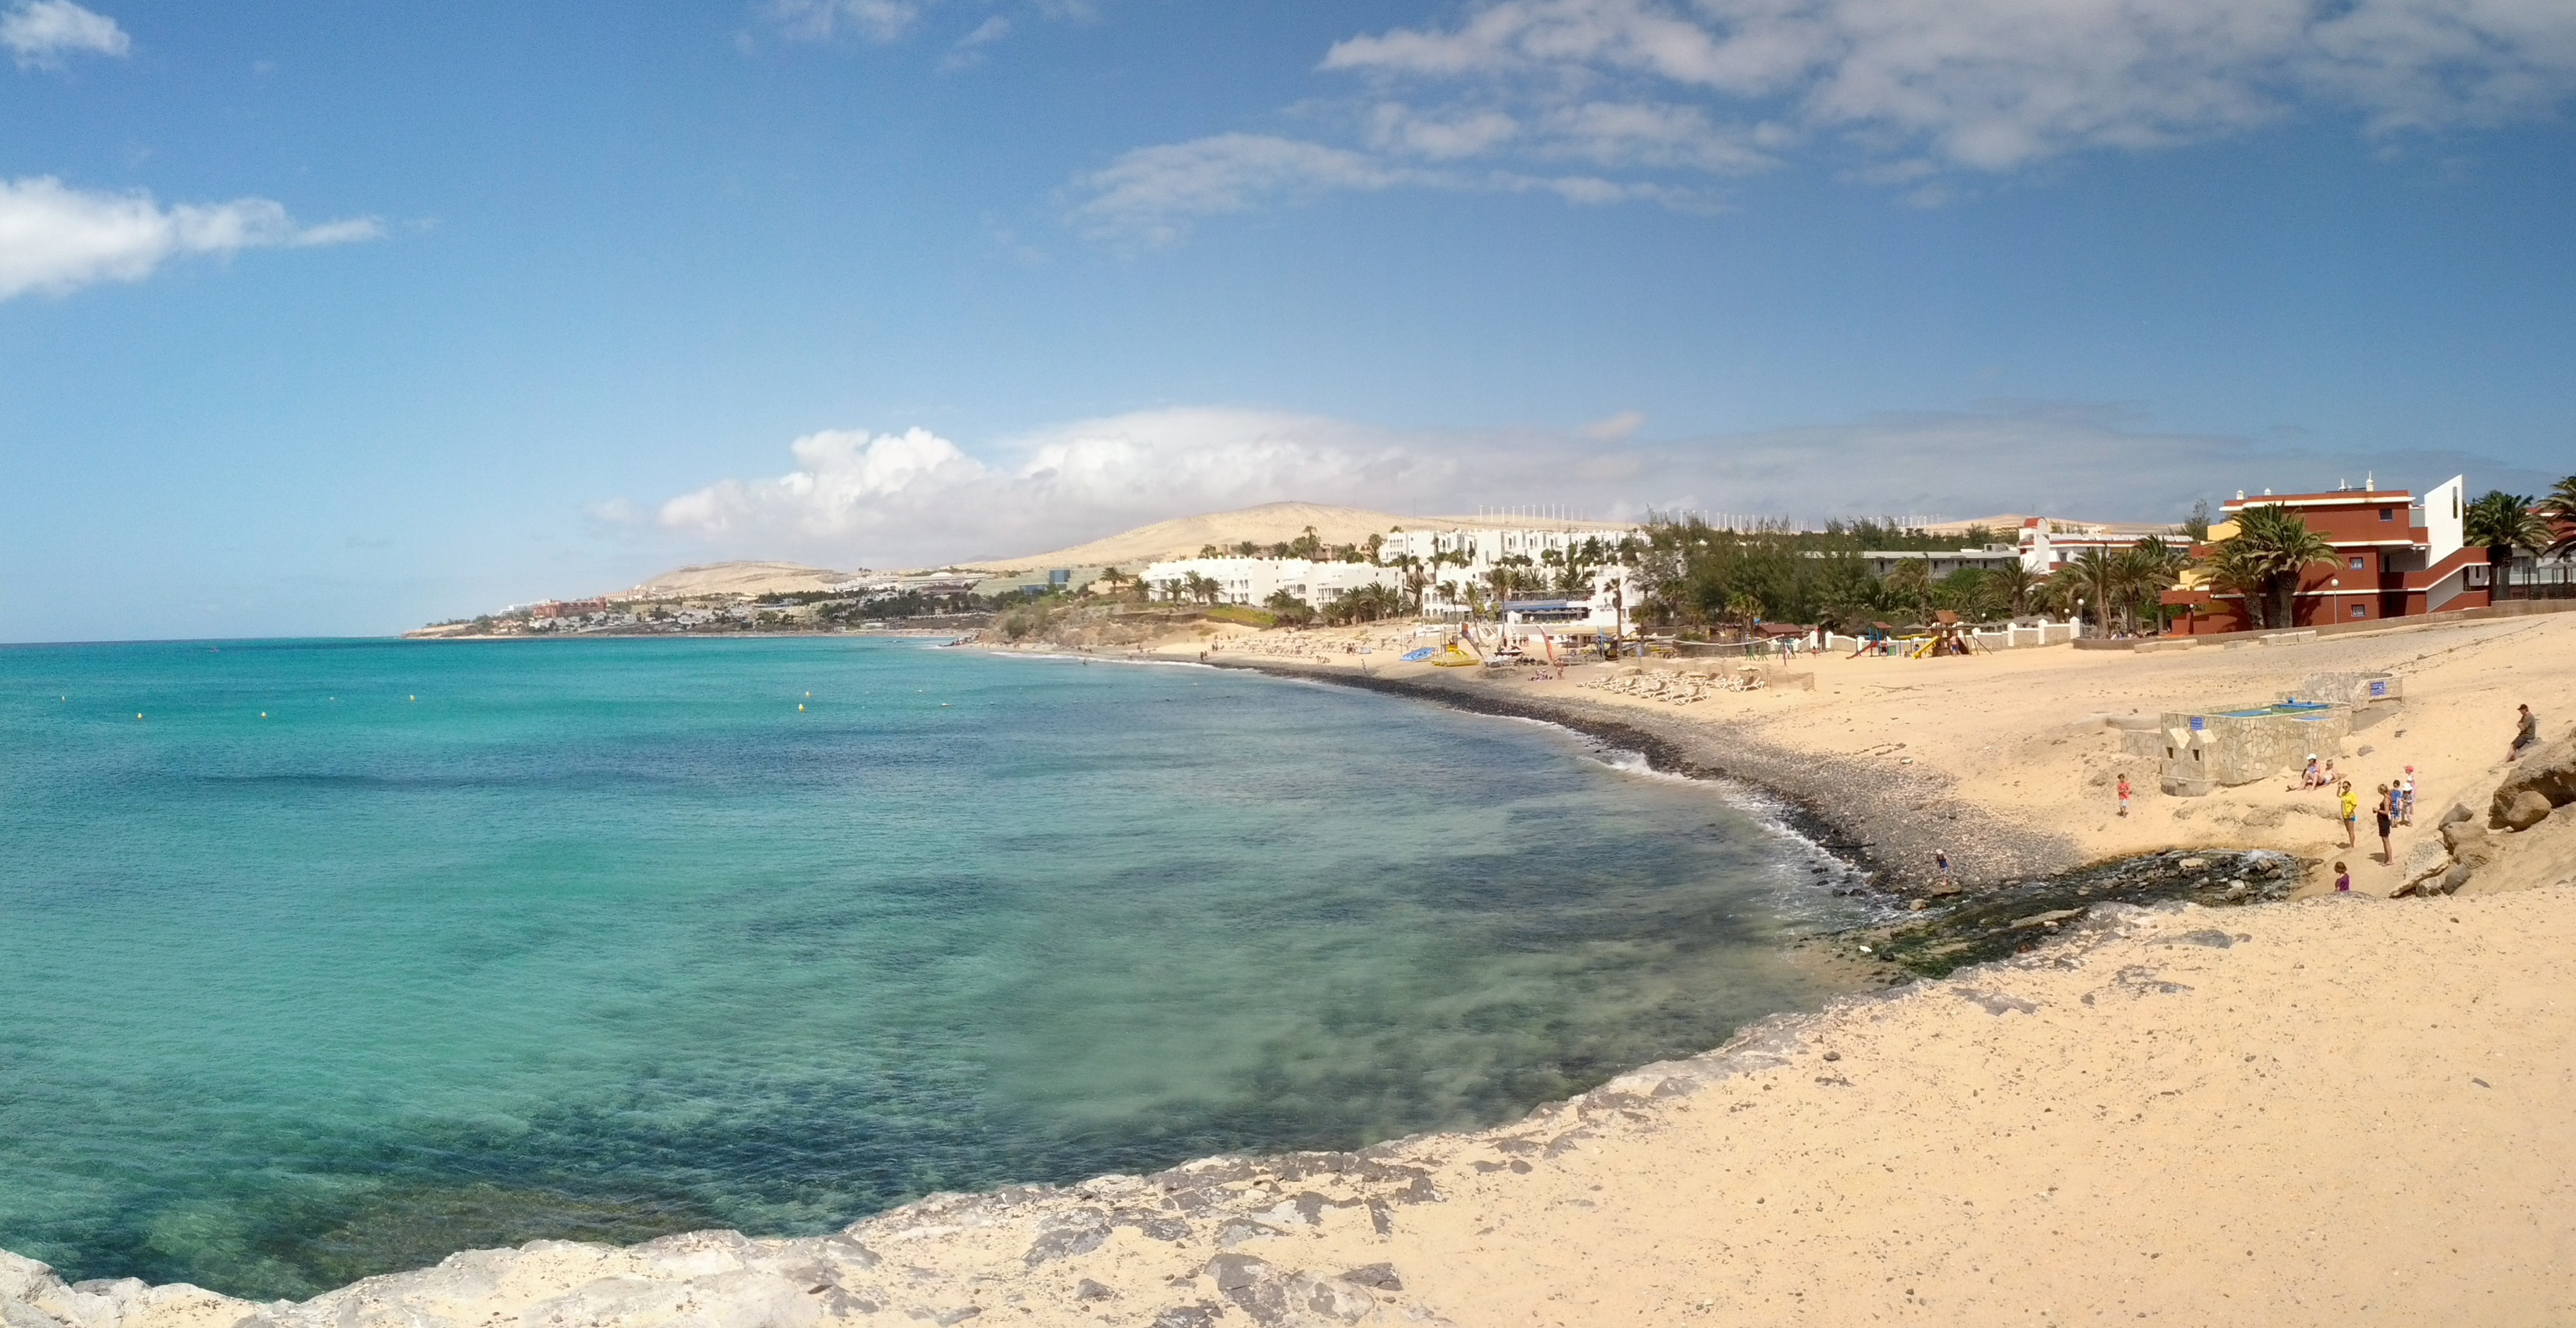 File:Costa Calma Fuerteventura 2014.jpg - Wikimedia Commons